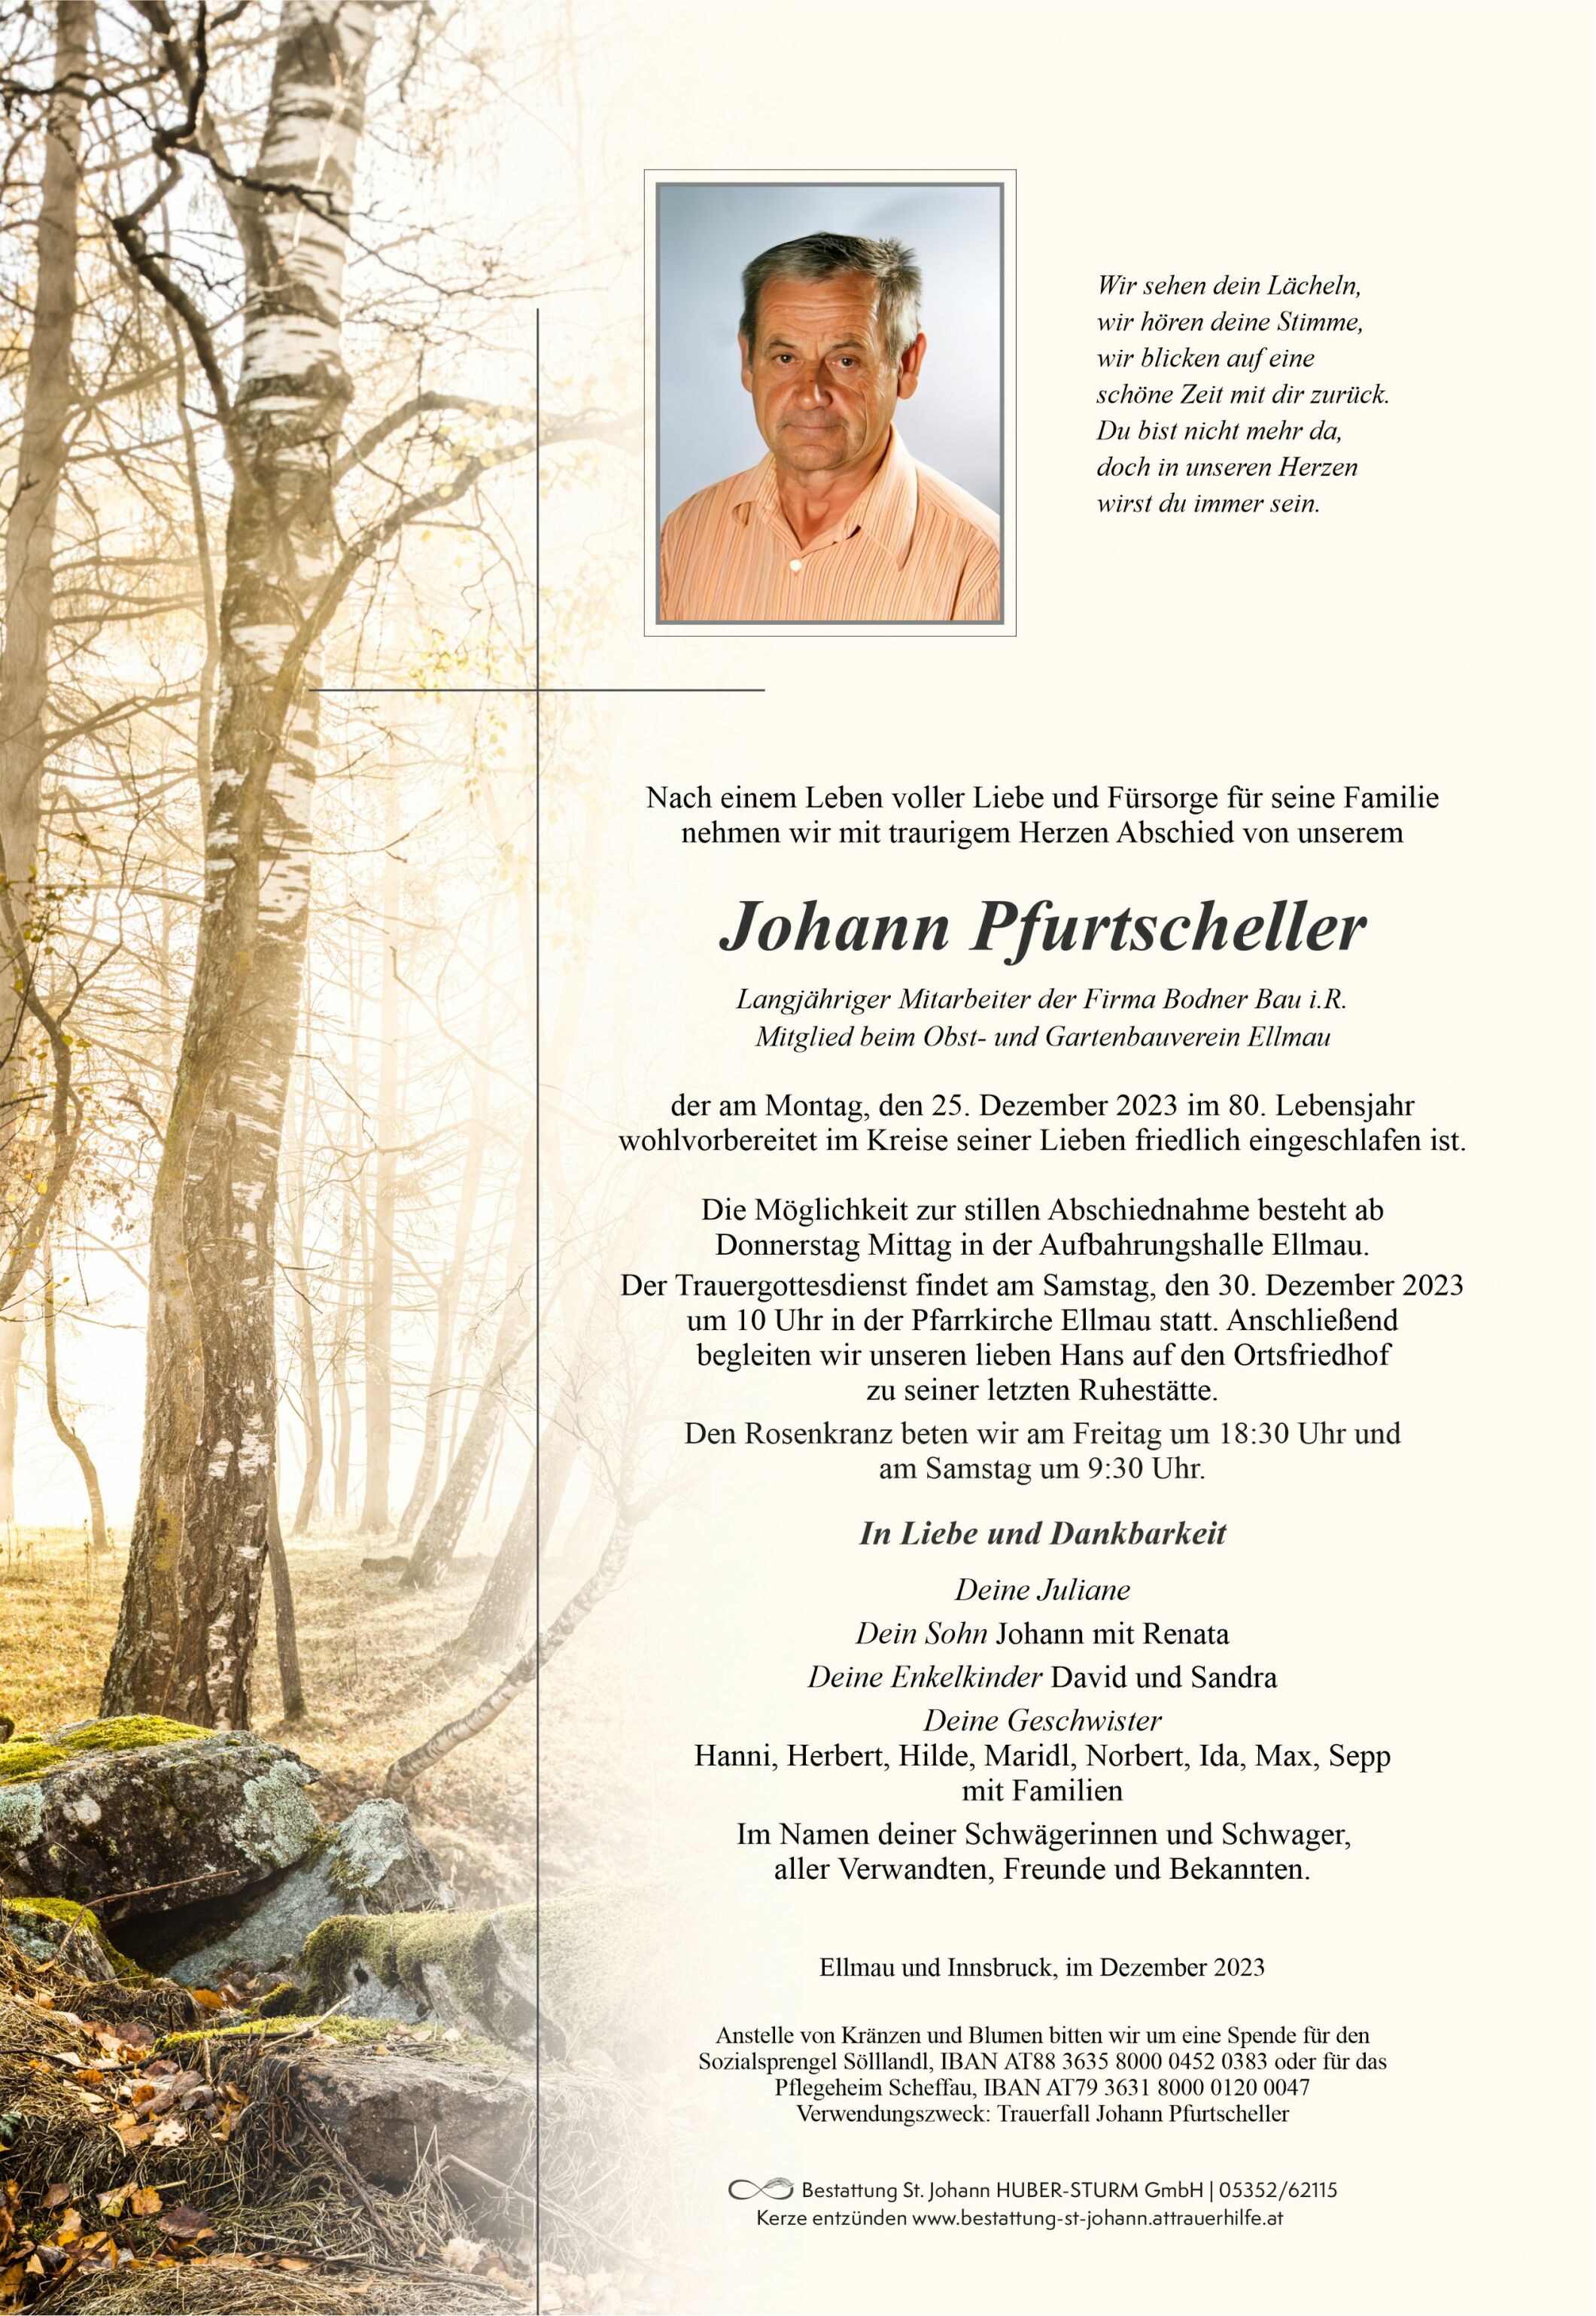 Johann Pfurtscheller